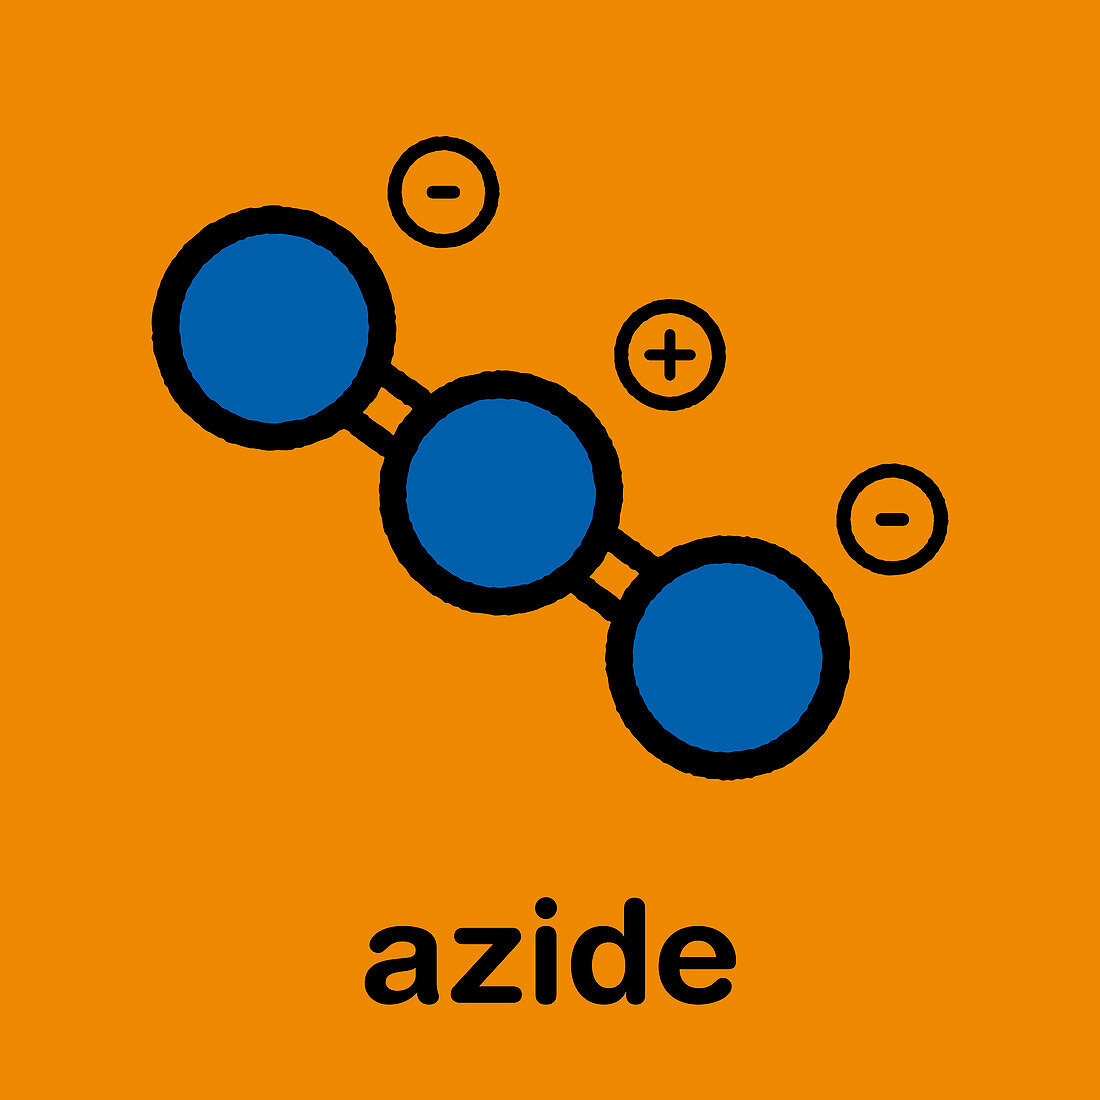 Azide anion chemical structure, illustration